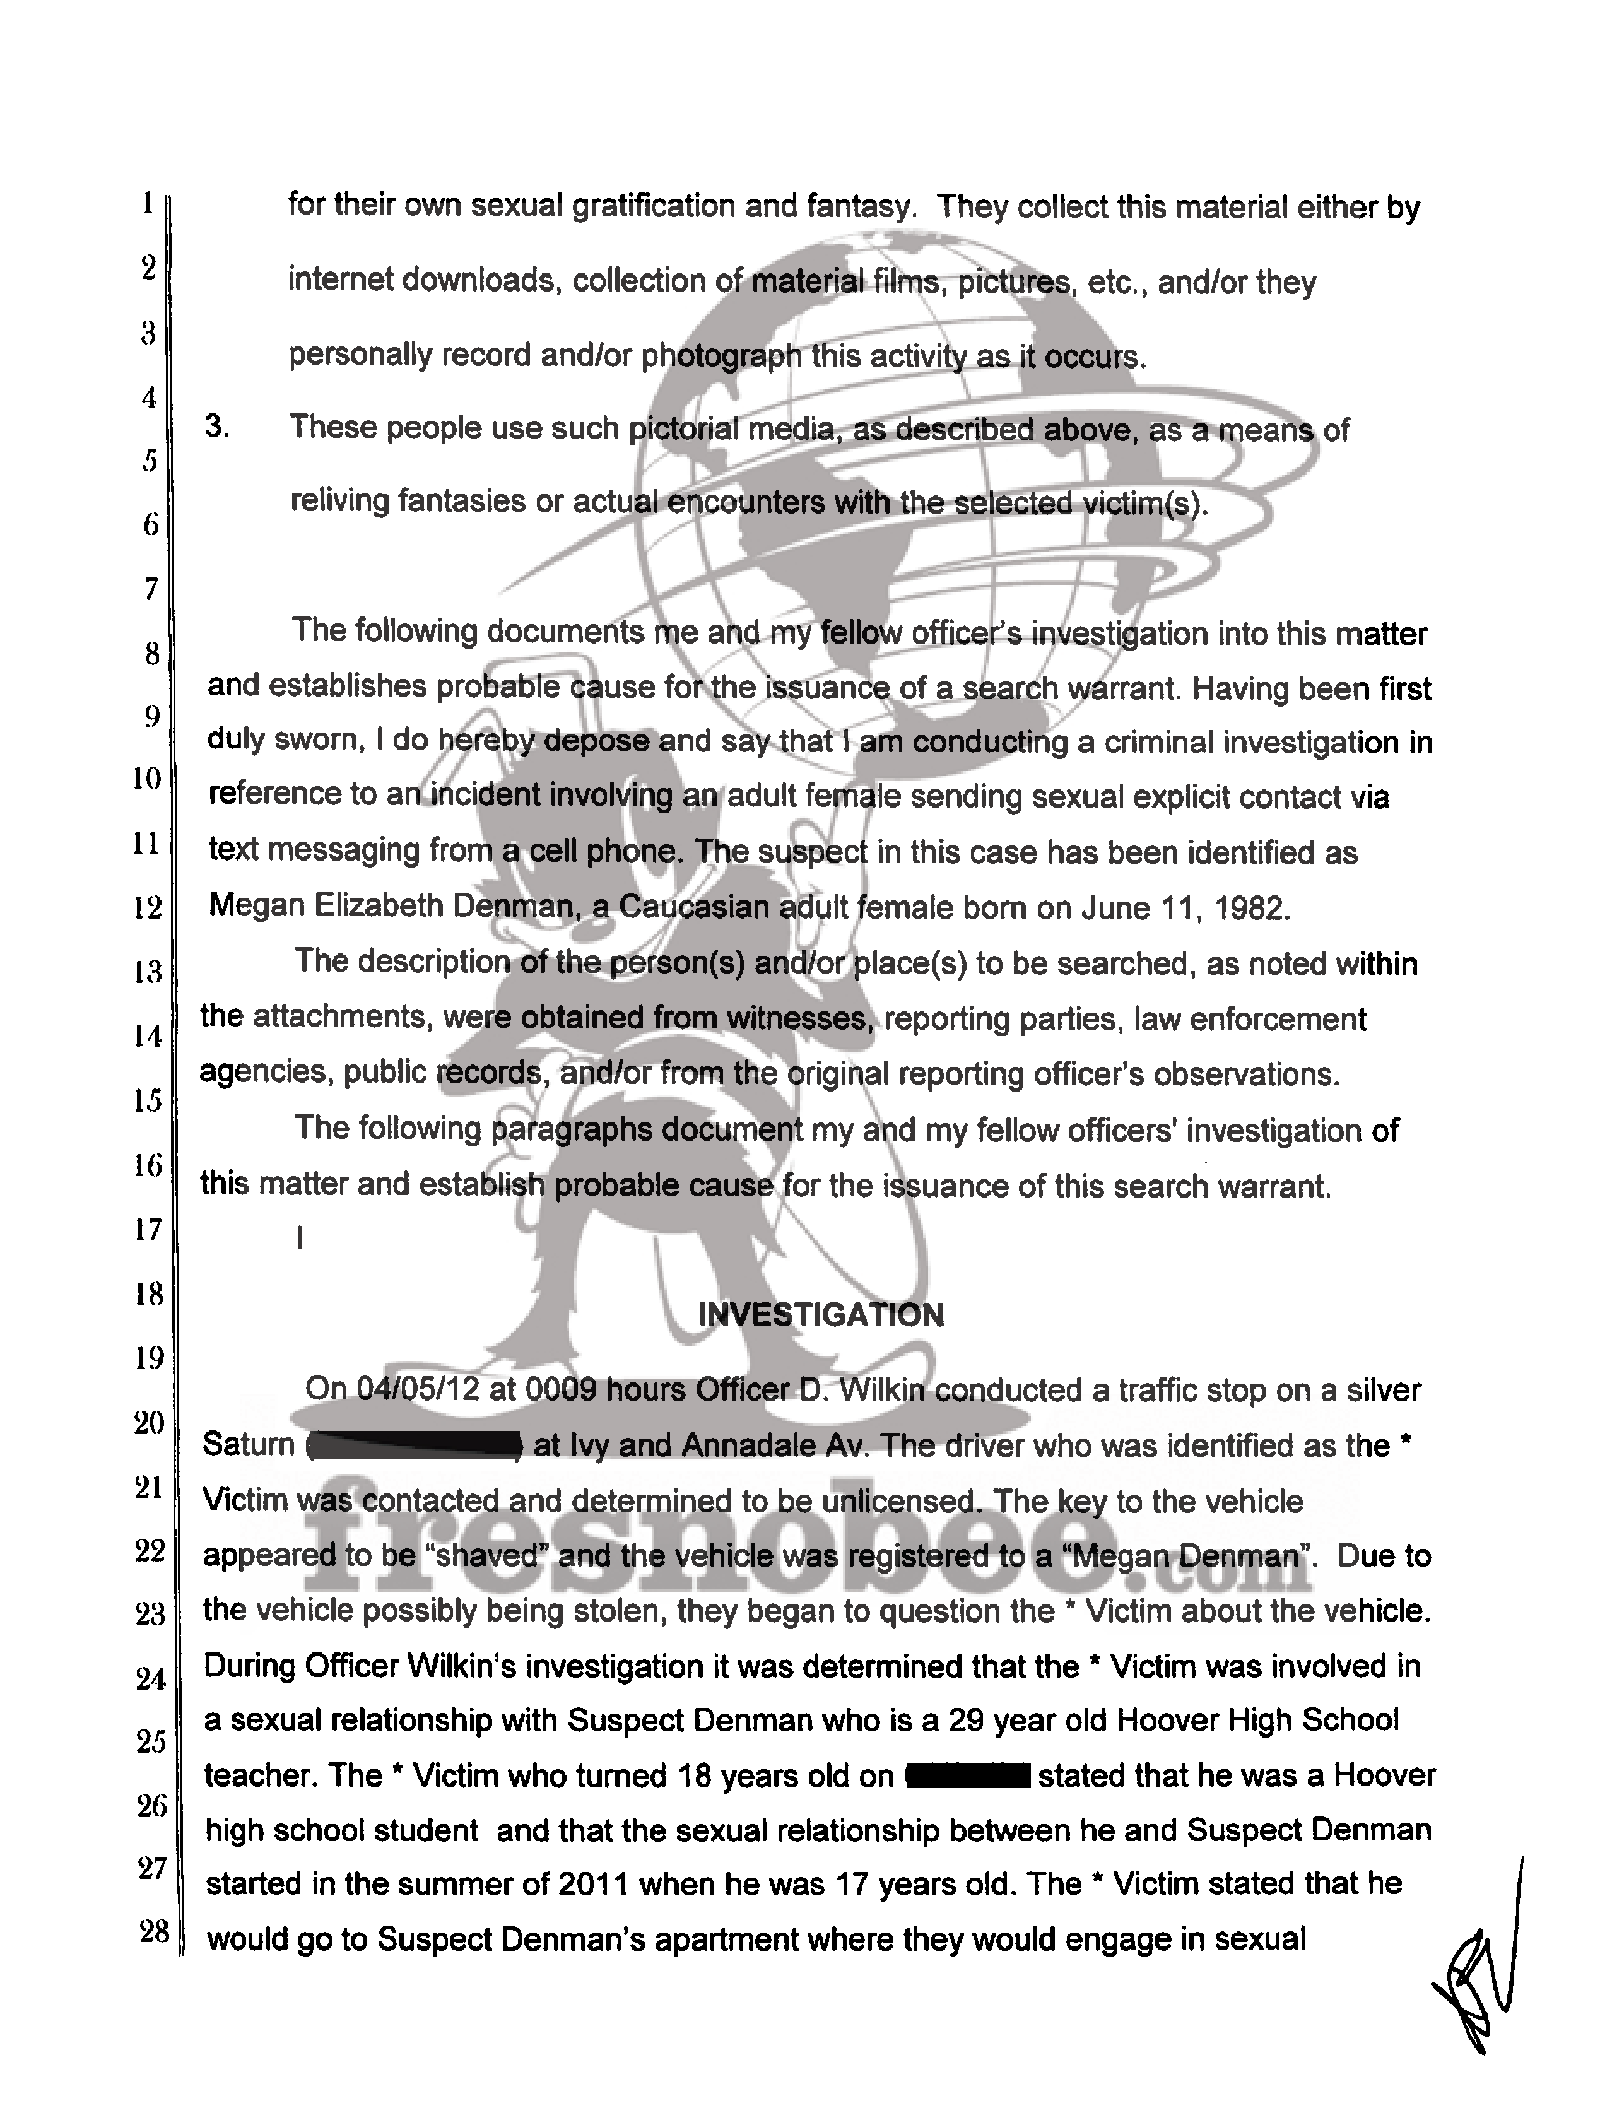 Copy of denman megan search warrant affidavit3.png